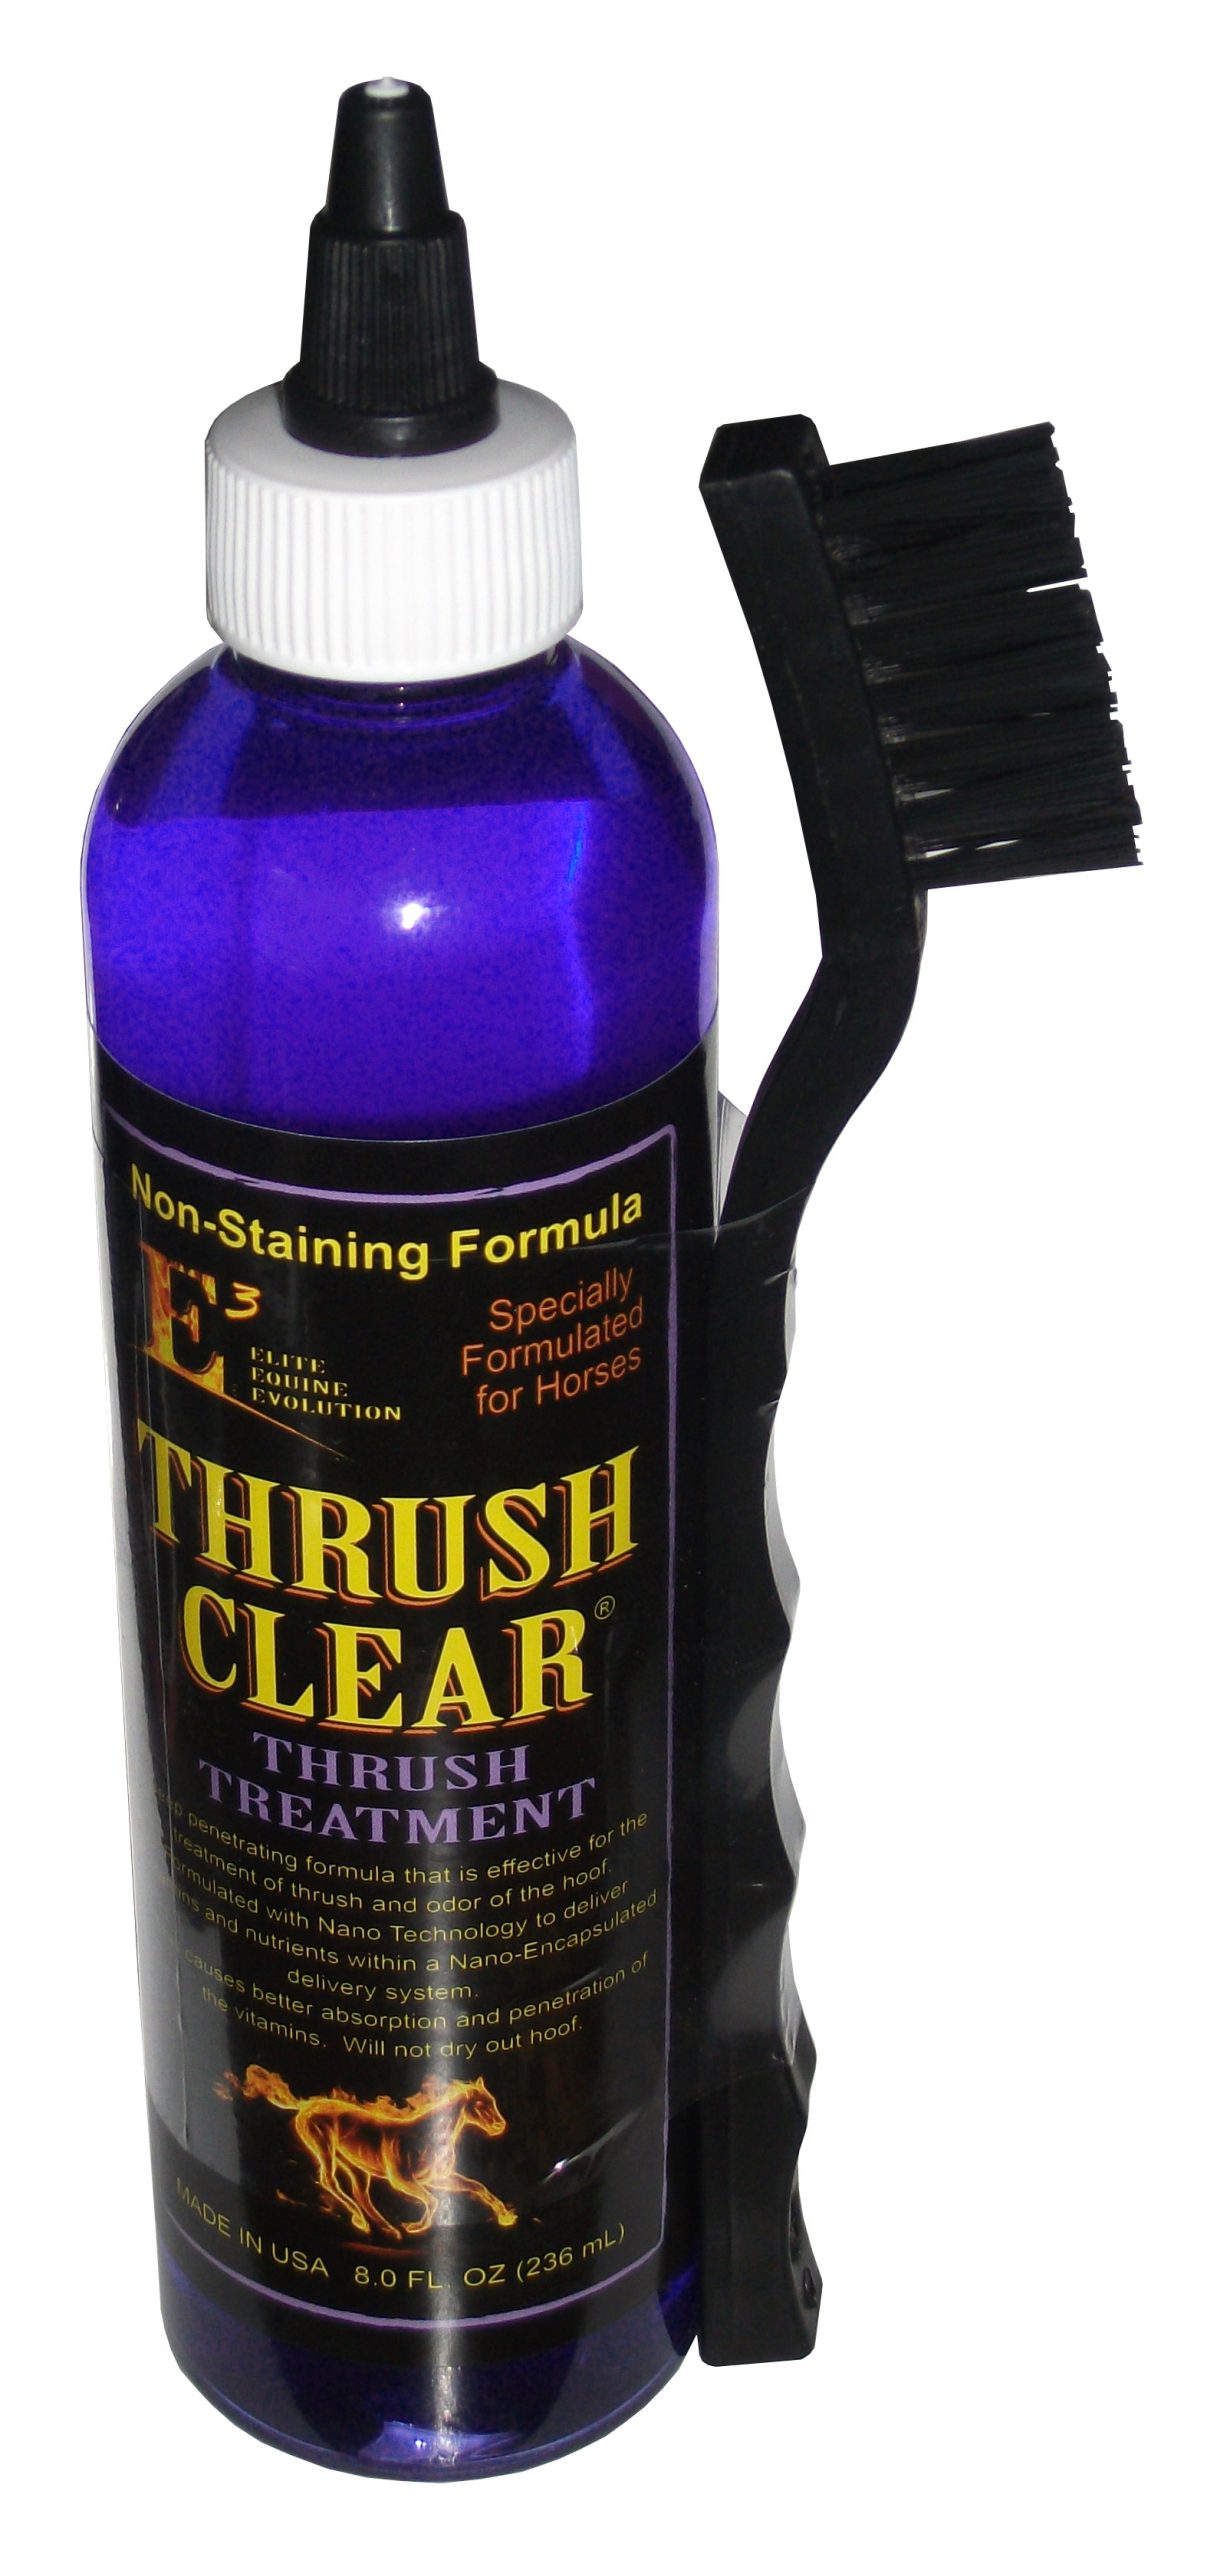 Thrush Clear Thrush Treatment